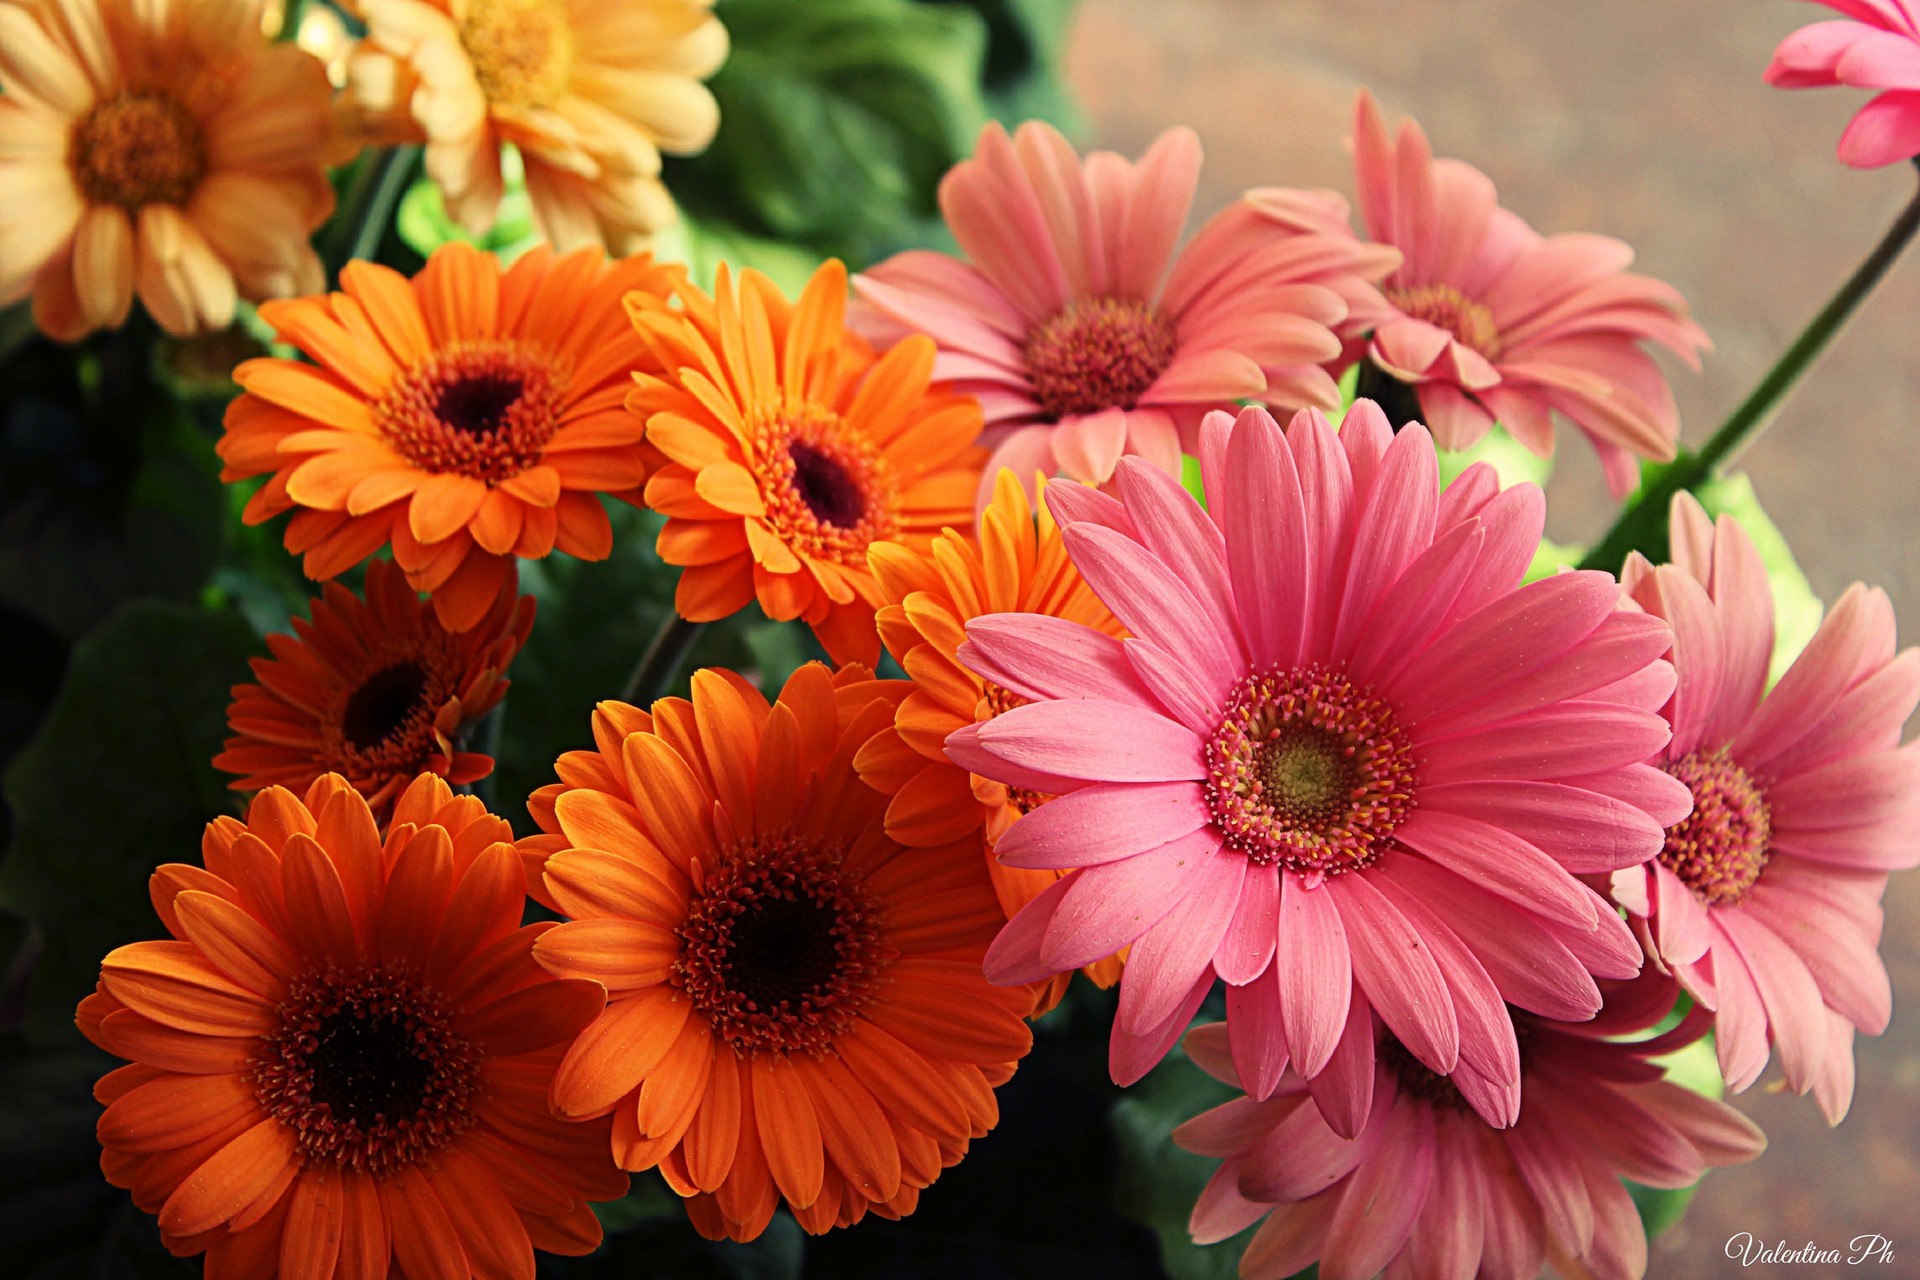 Handy-Wallpaper Blumen, Gerbera, Farben, Bunt, Erde/natur, Pinke Blume, Orangene Blume kostenlos herunterladen.